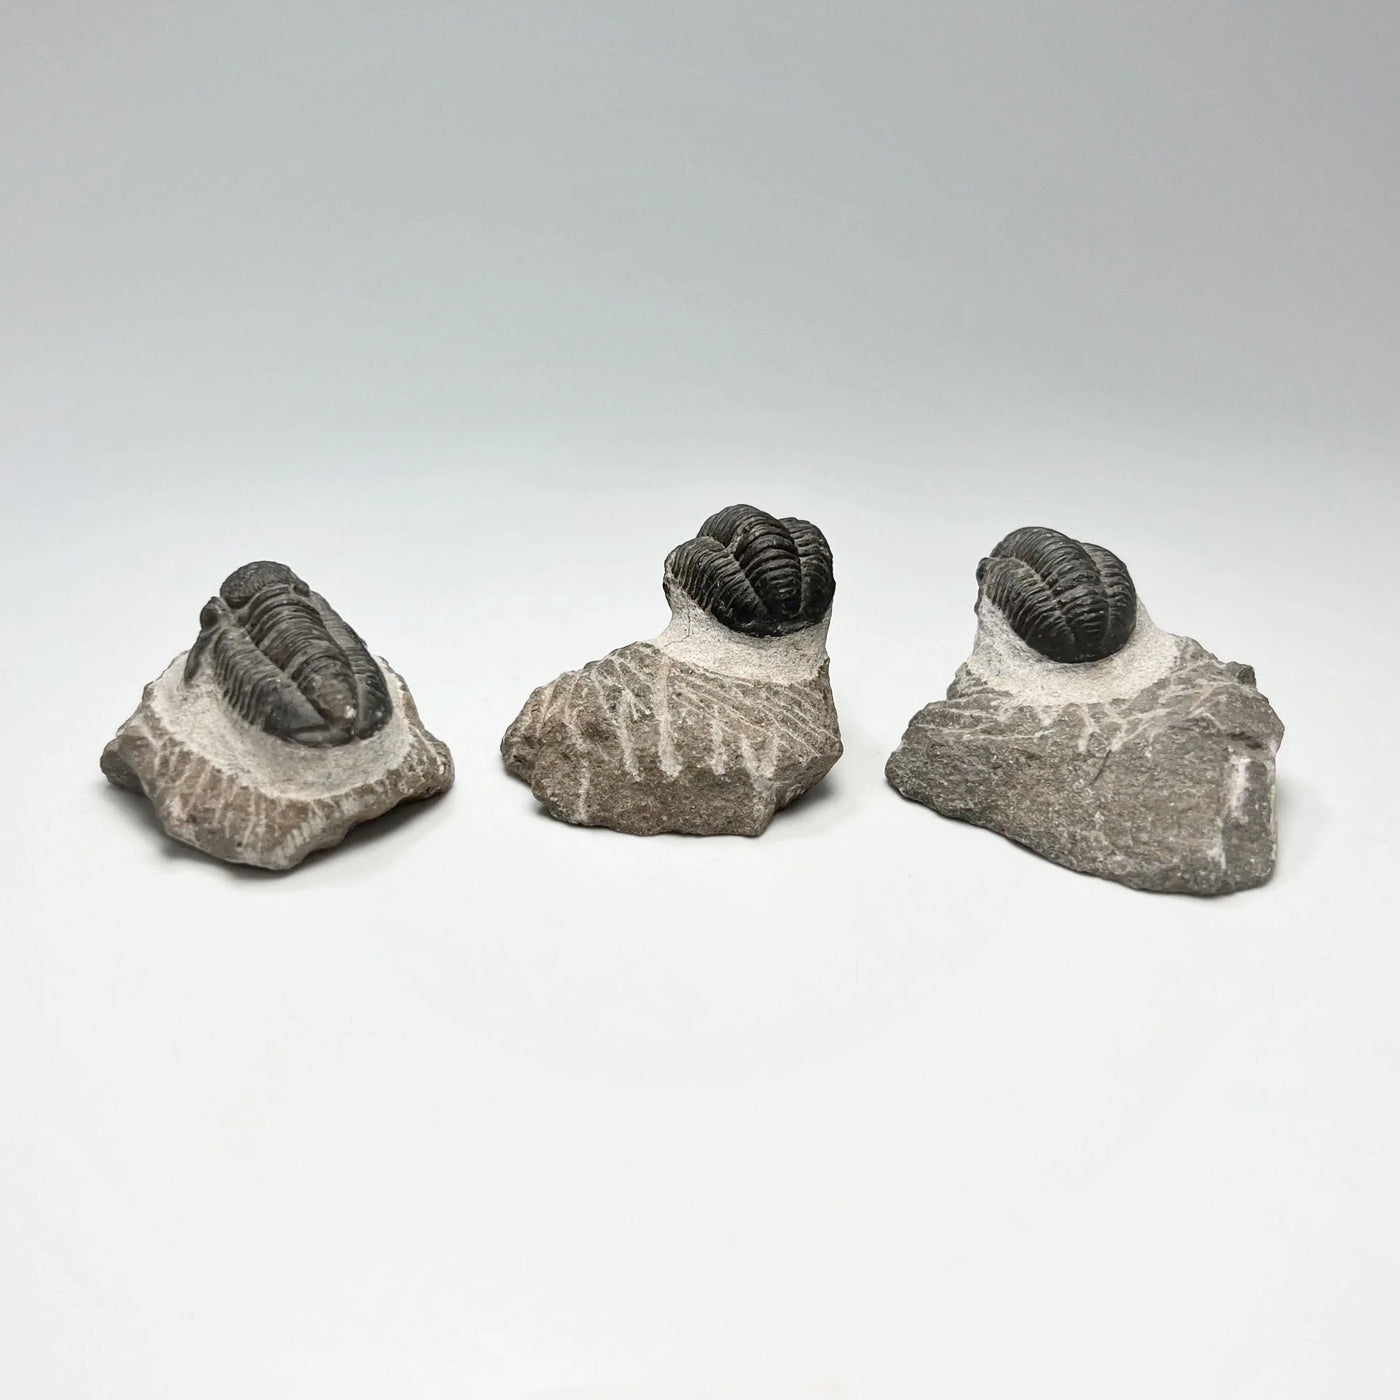 Trilobite Proetus Fossil at $89 Each